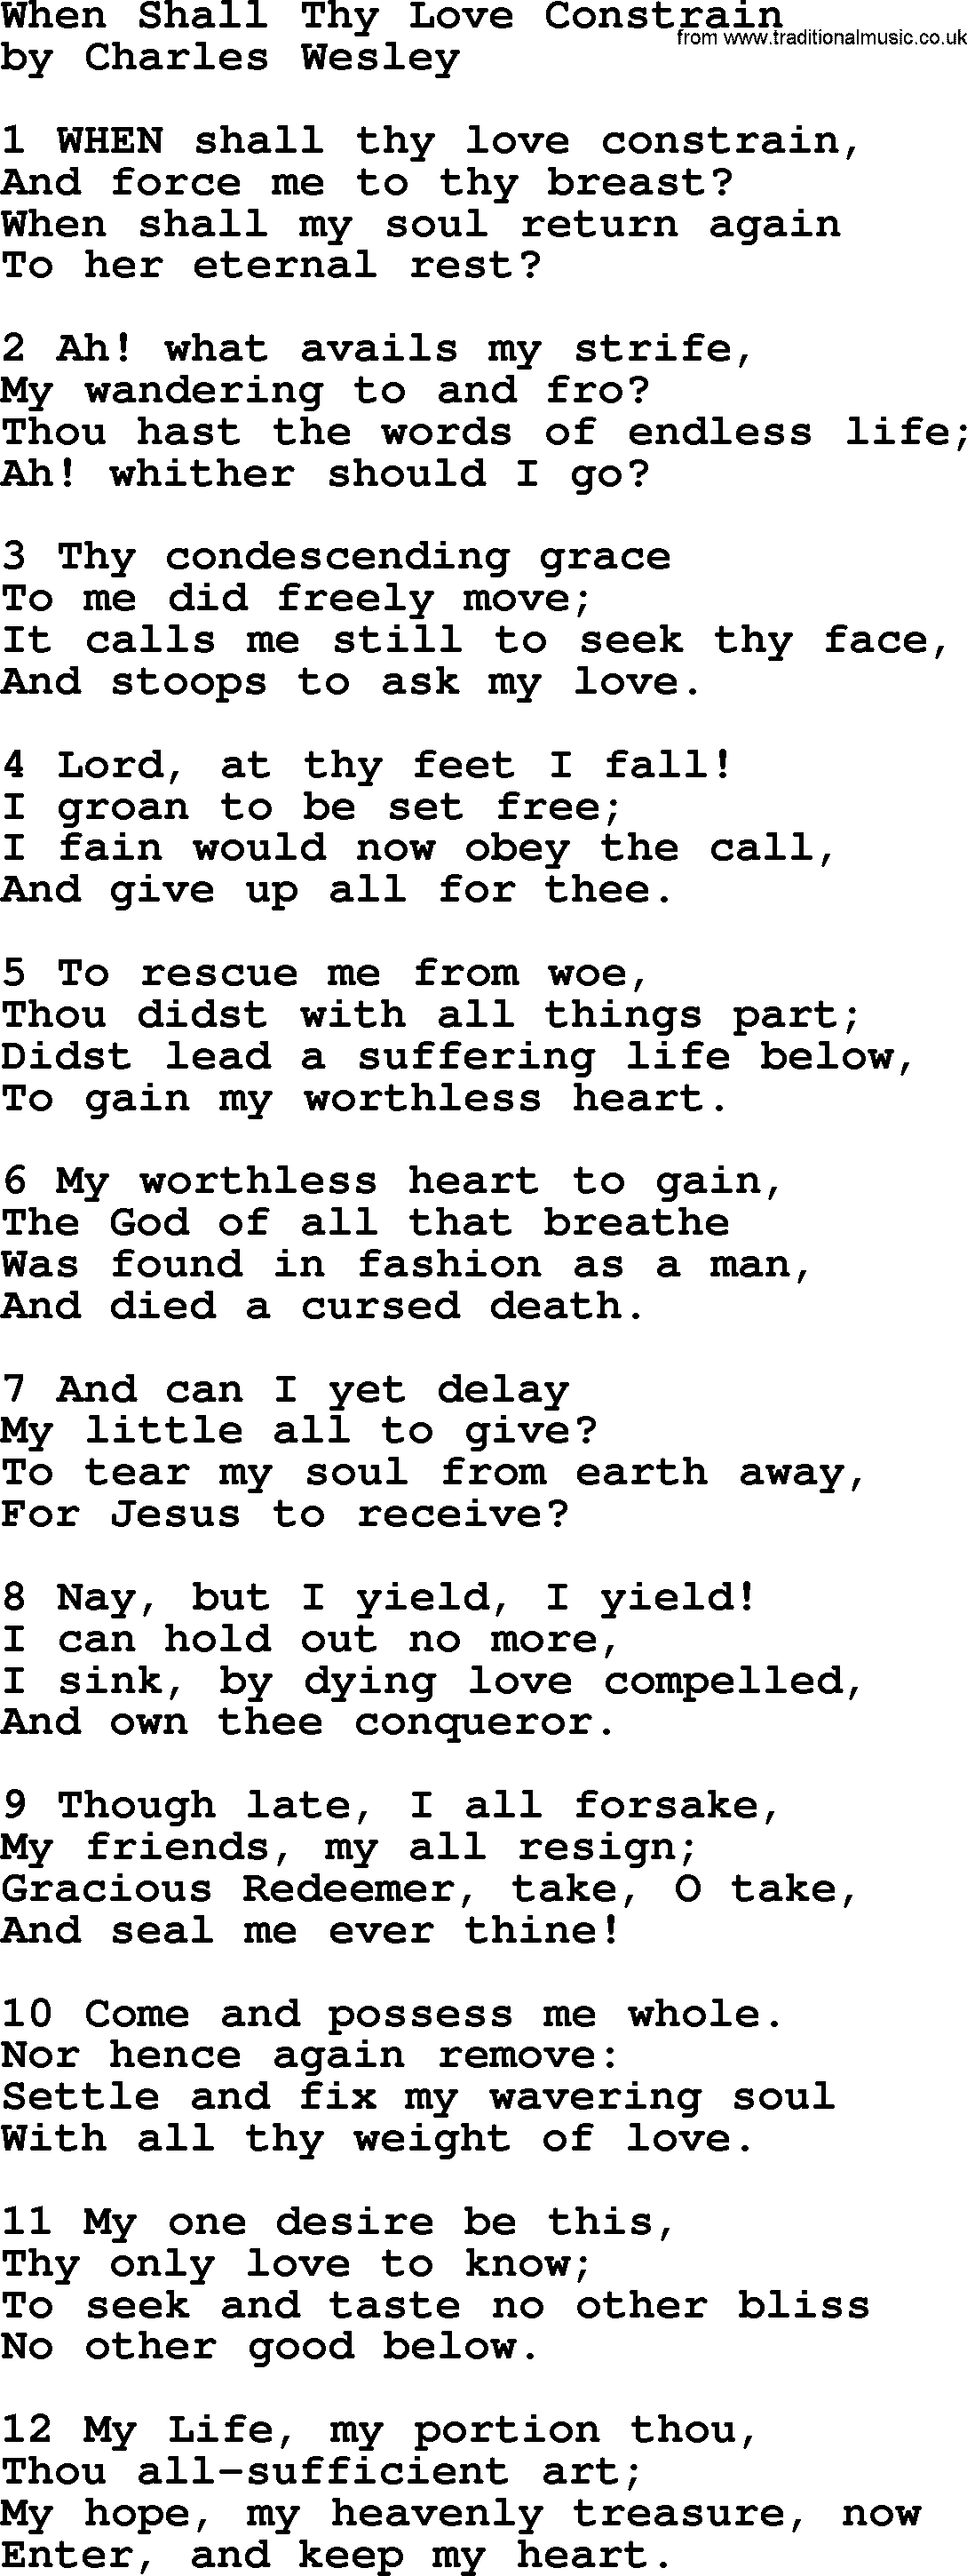 Charles Wesley hymn: When Shall Thy Love Constrain, lyrics